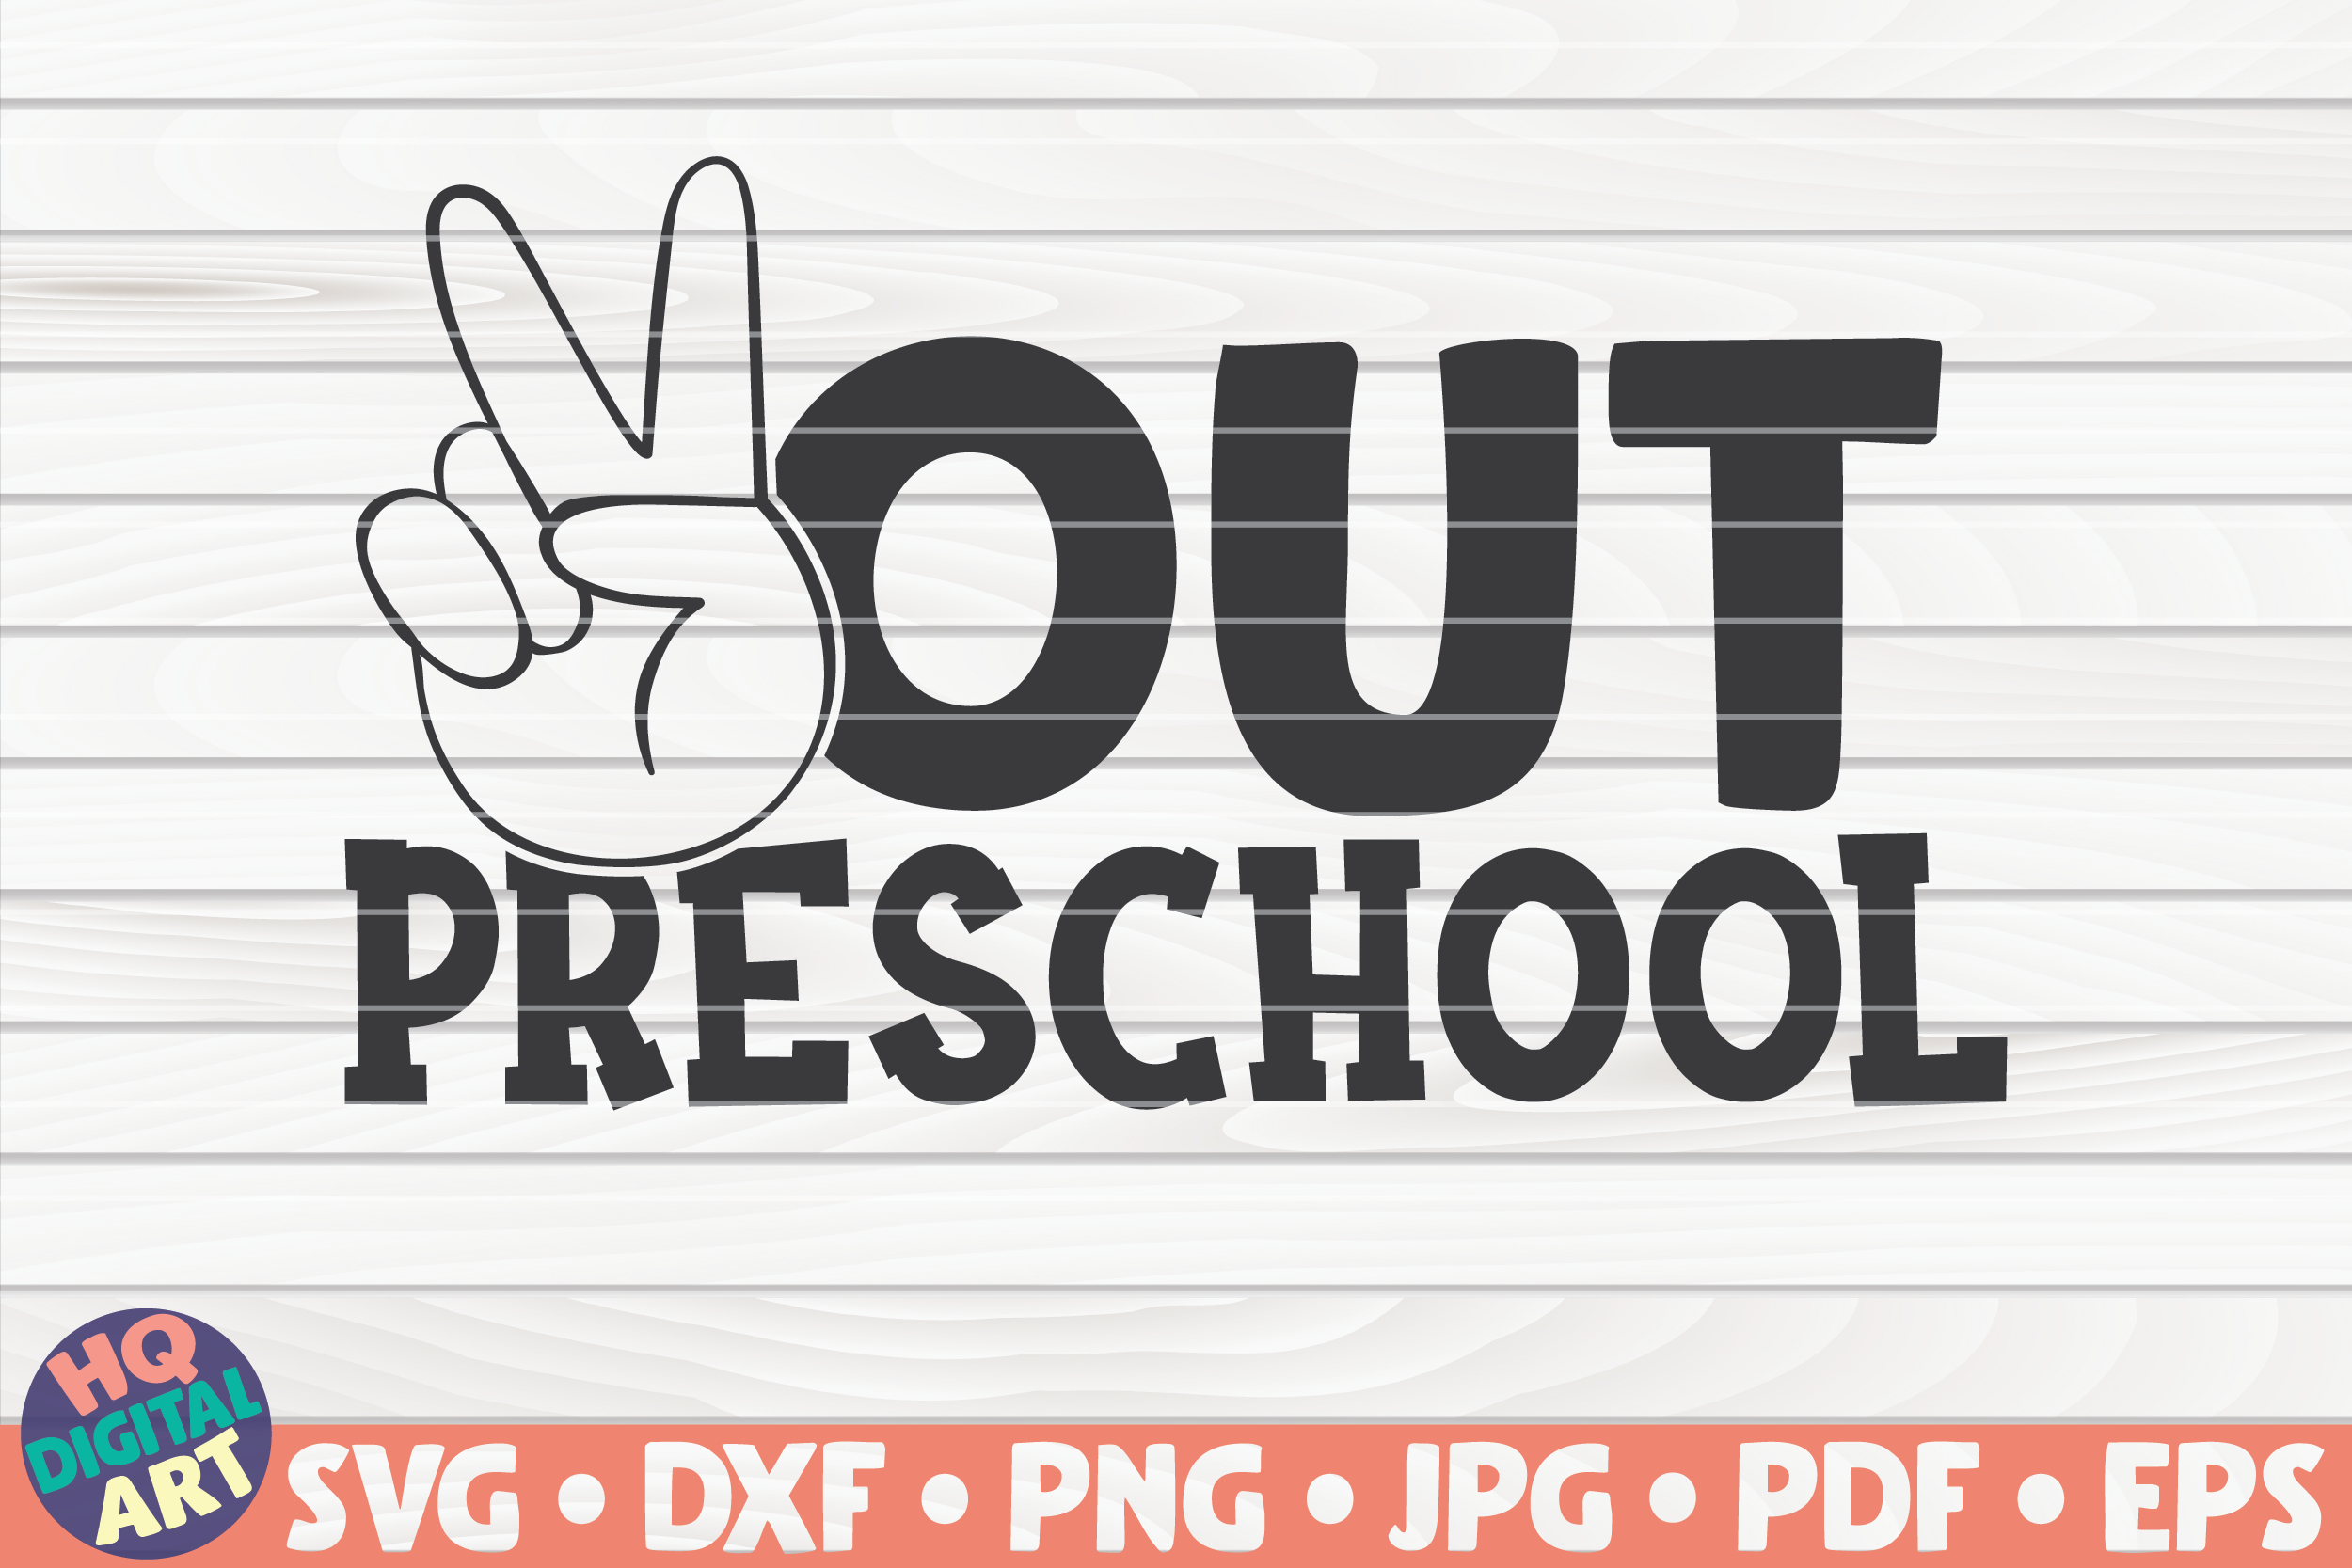 Peace out preschool SVG By HQDigitalArt | TheHungryJPEG